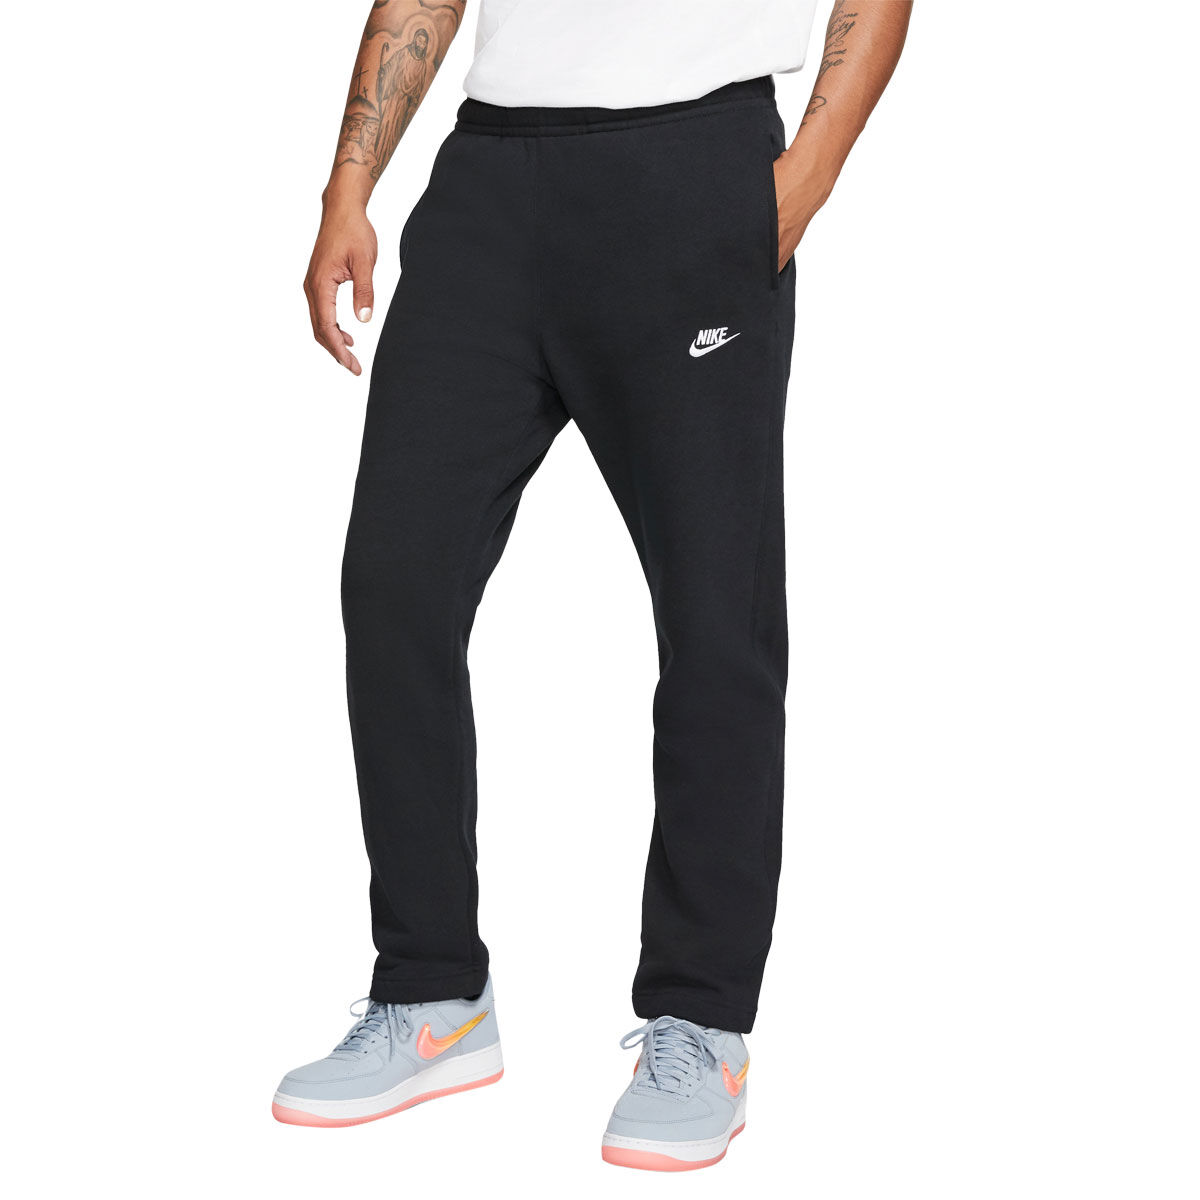 Shop for Nike Track Pants Online at Best Price | SUPERBALIST